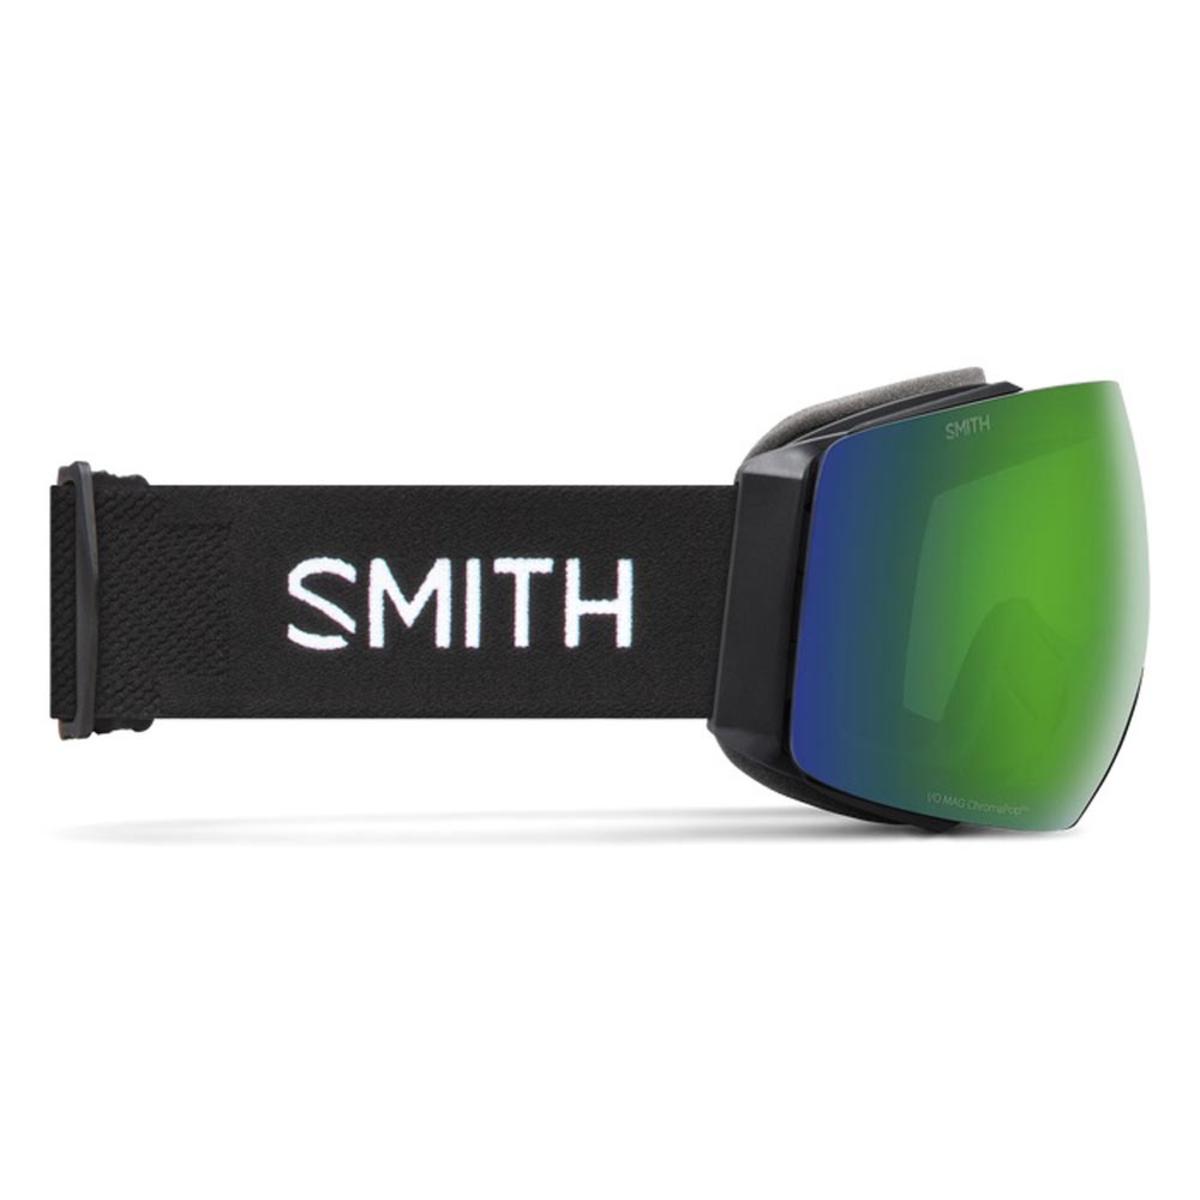 Smith Optics I/O MAG Goggles ChromaPop Sun Green Mirror - Black Frame